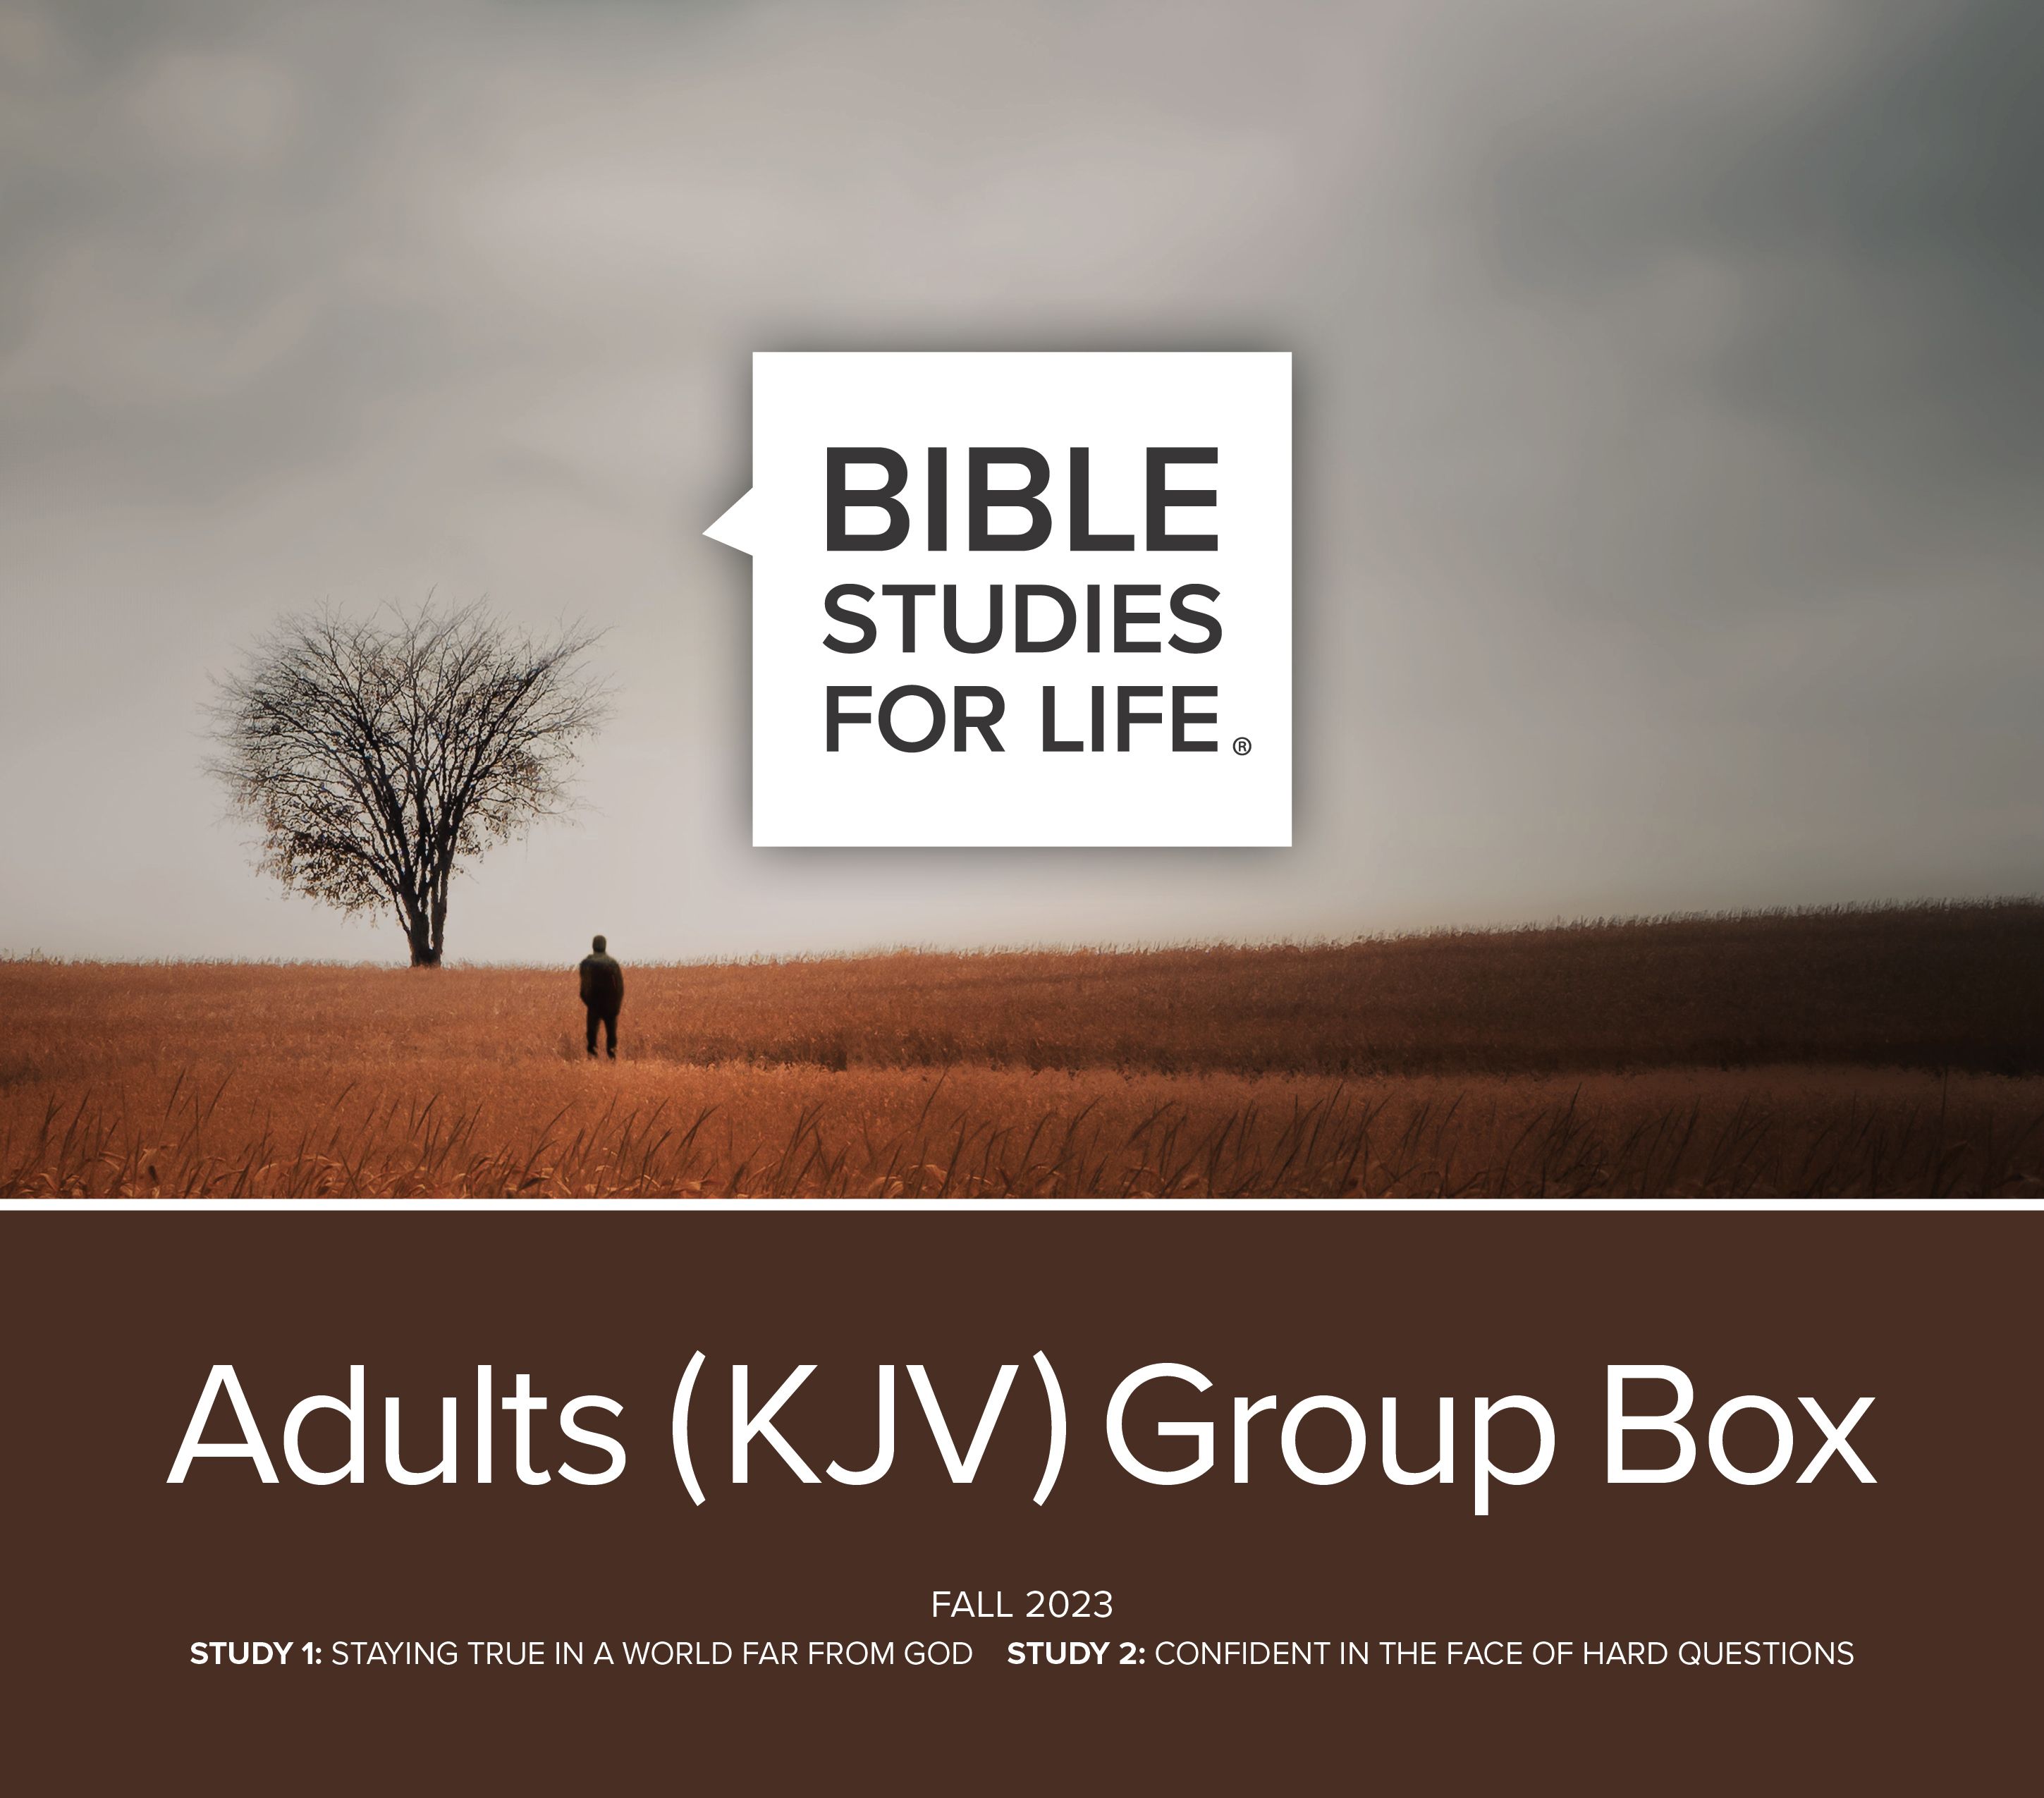 Bible Studies for Life Group Box